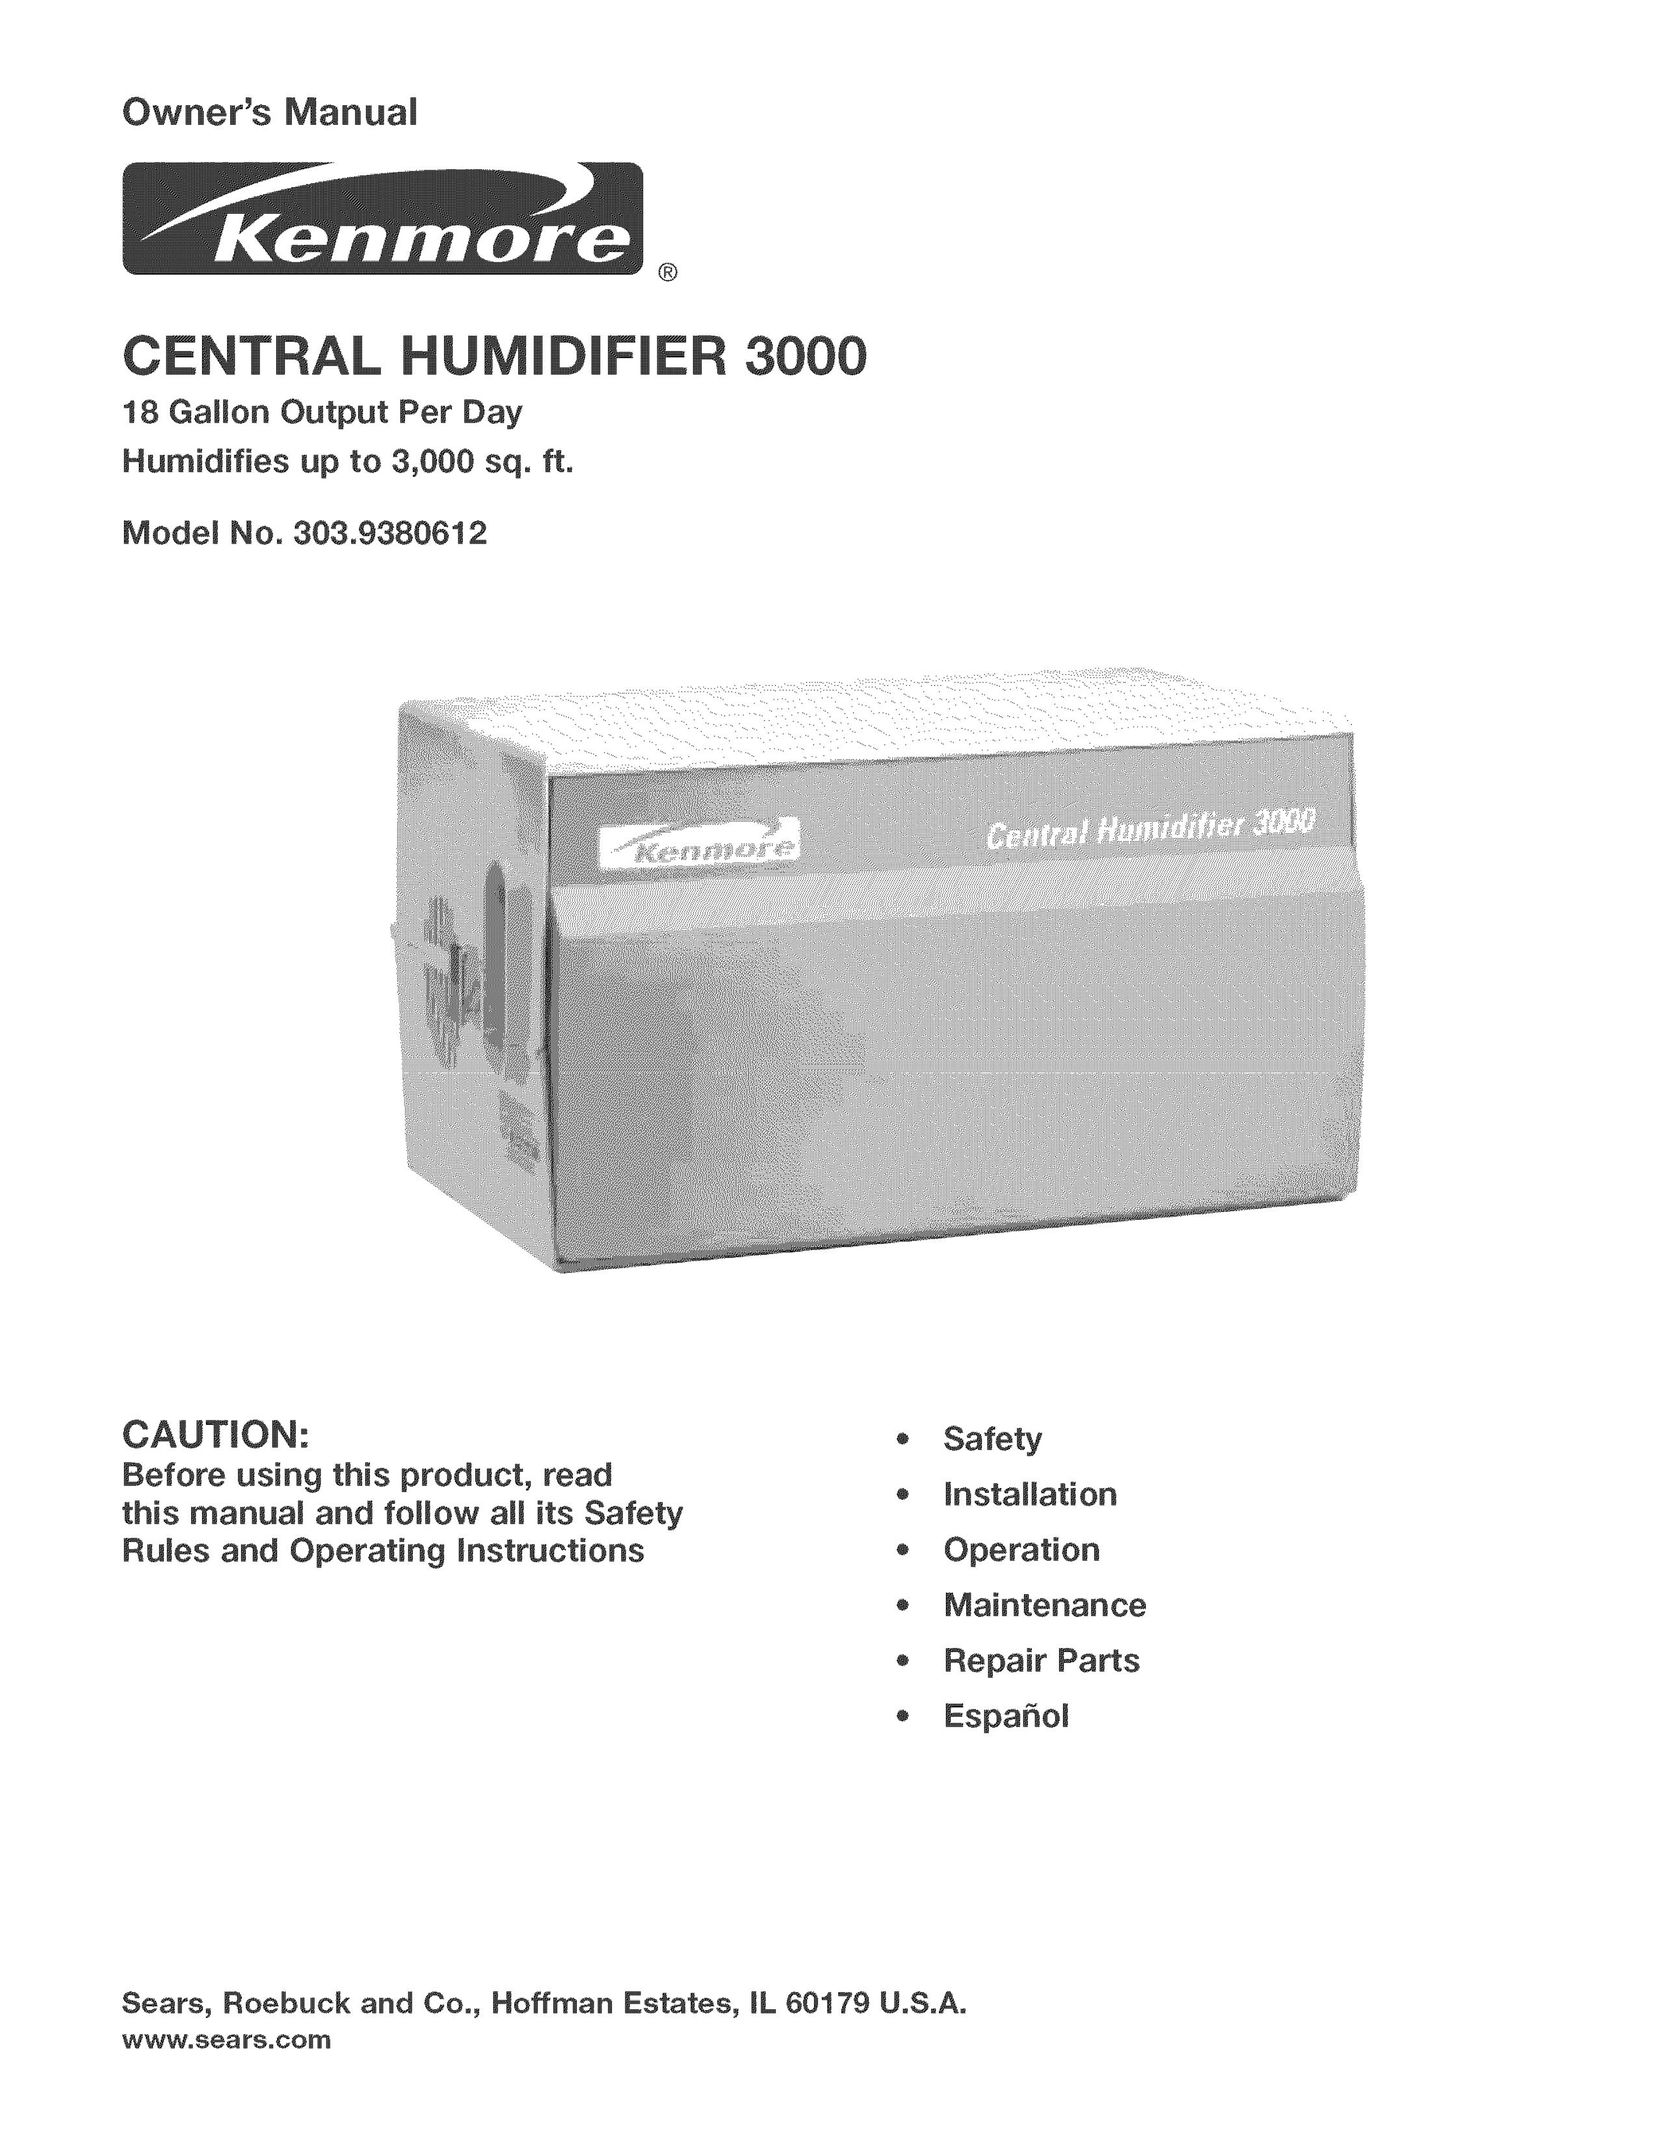 Kenmore 303.9380612 Dehumidifier User Manual